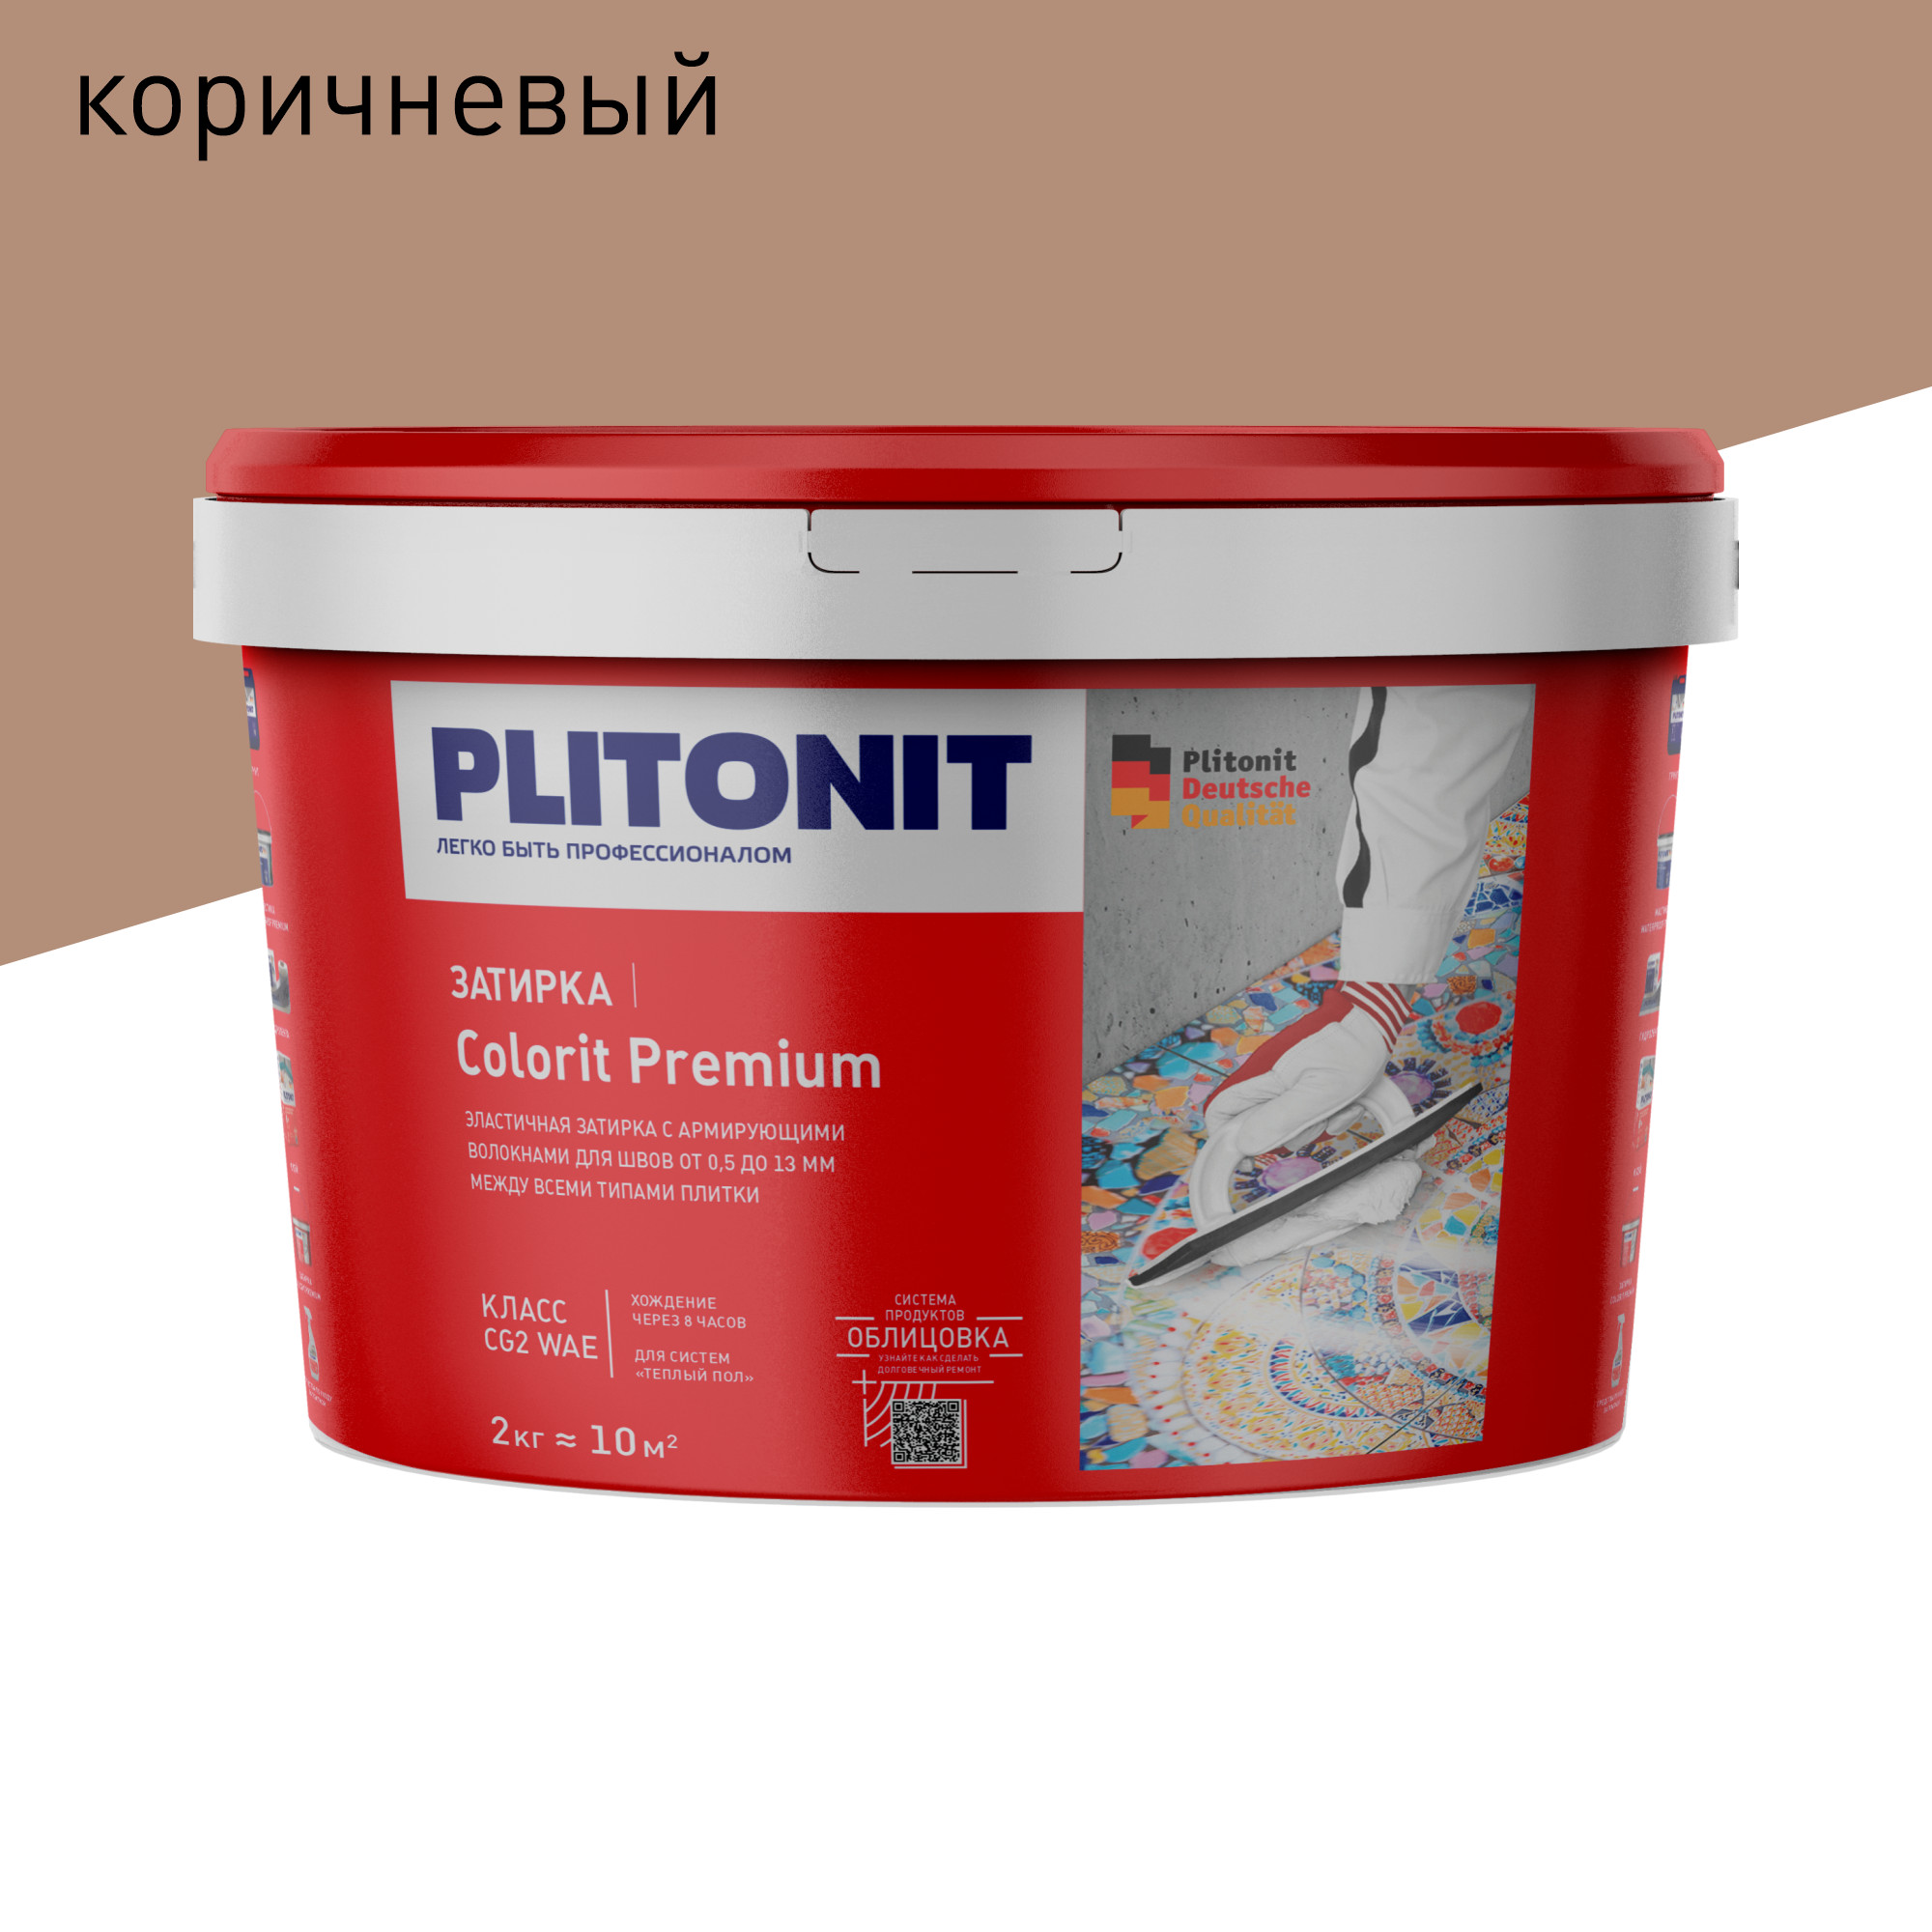 Затирка PLITONIT Colorit Premium коричневая 2 кг затирка цементная plitonit бежевая 20 кг